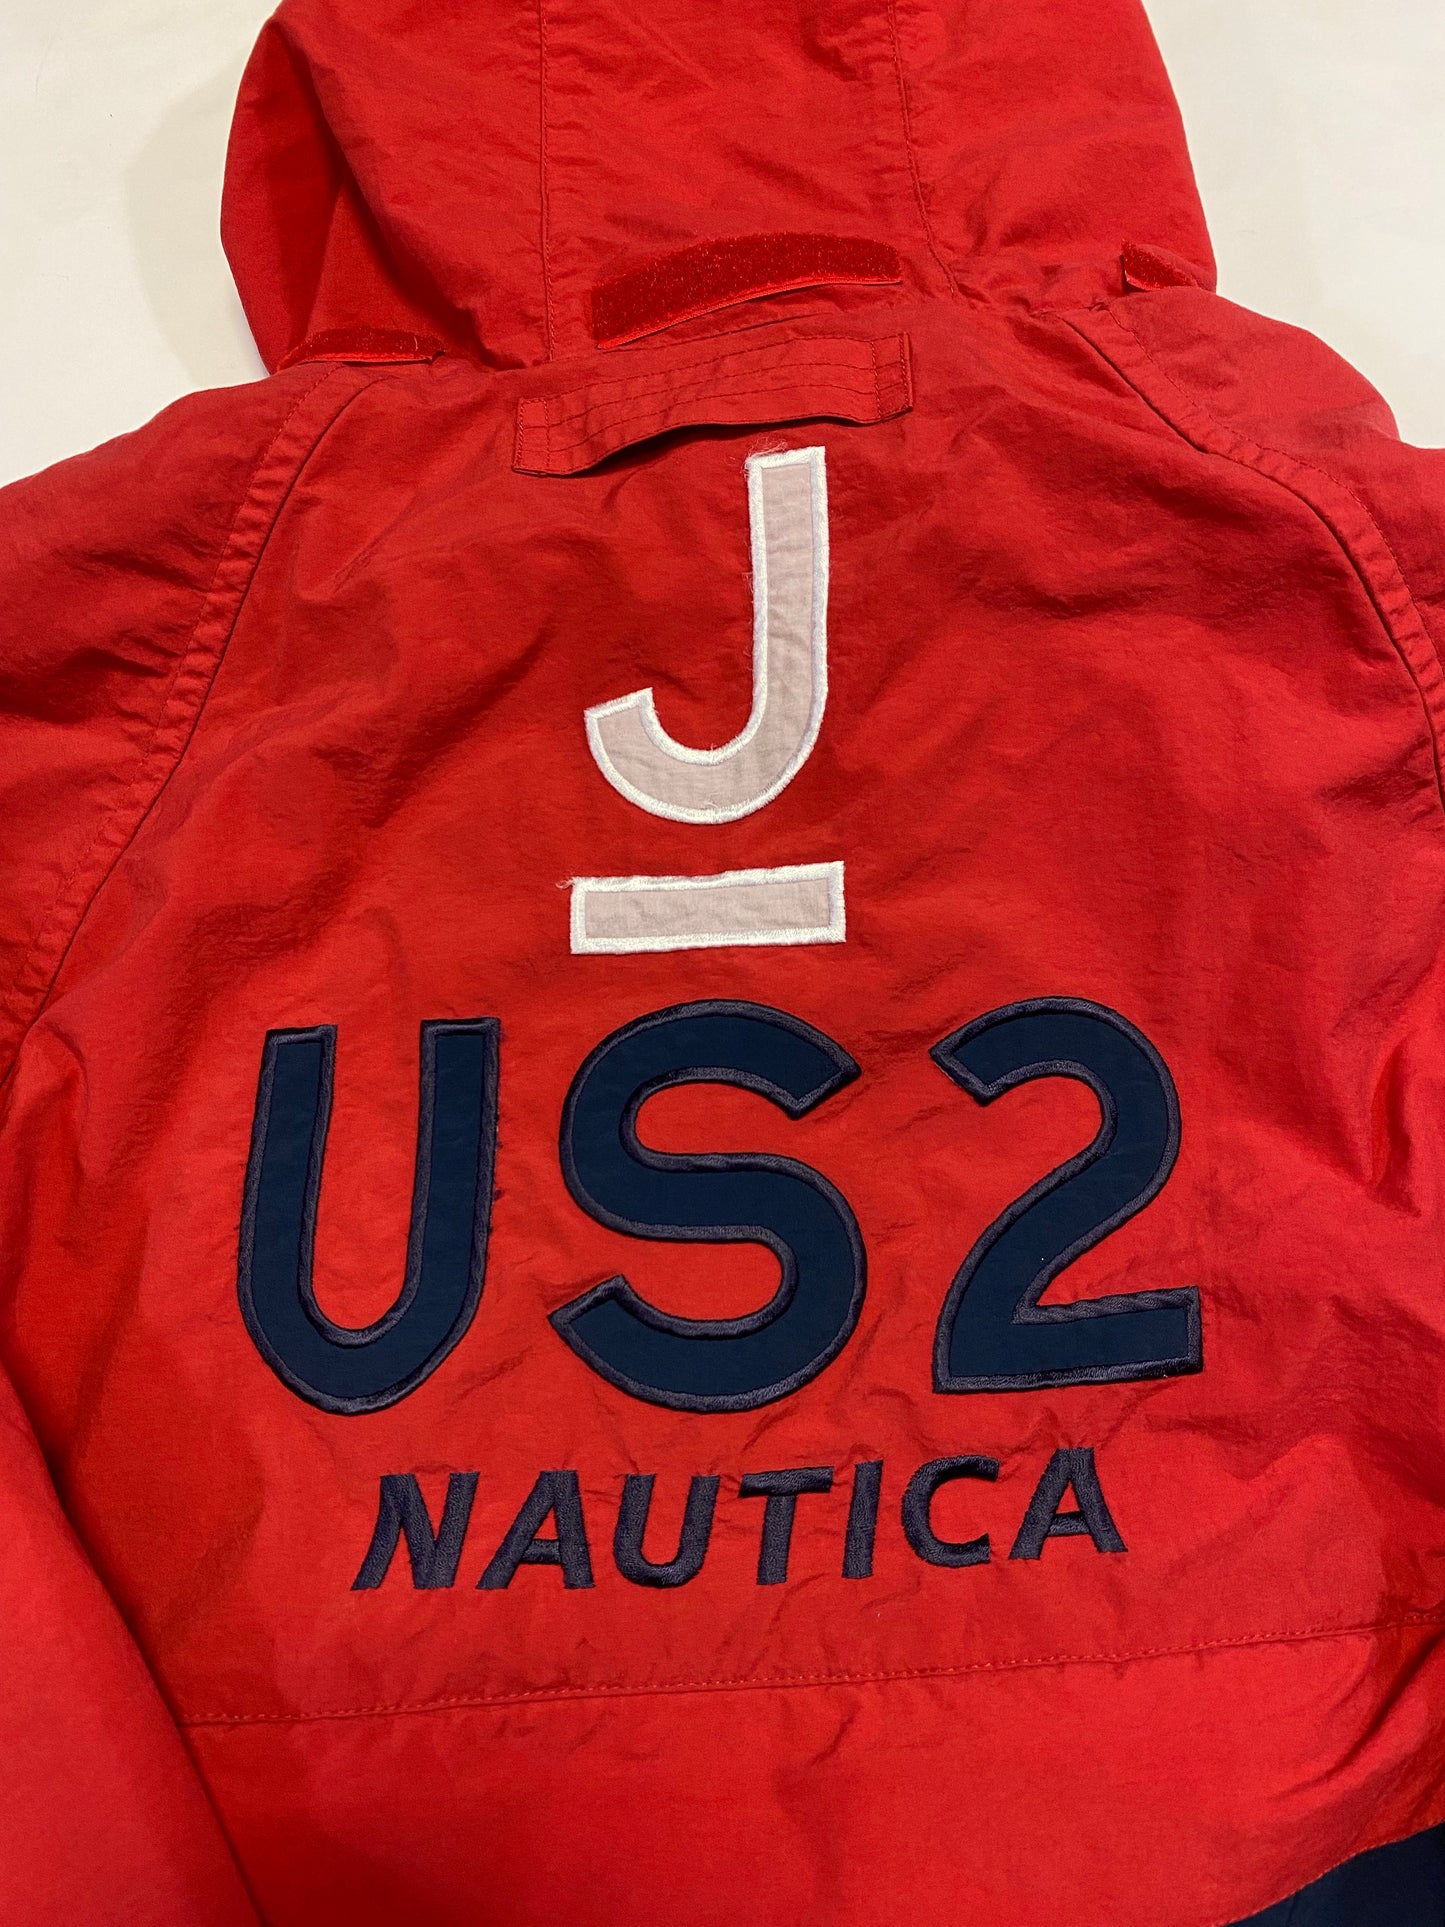 Vintage Nautica J-US2 Back Hit Zip Up Jacket